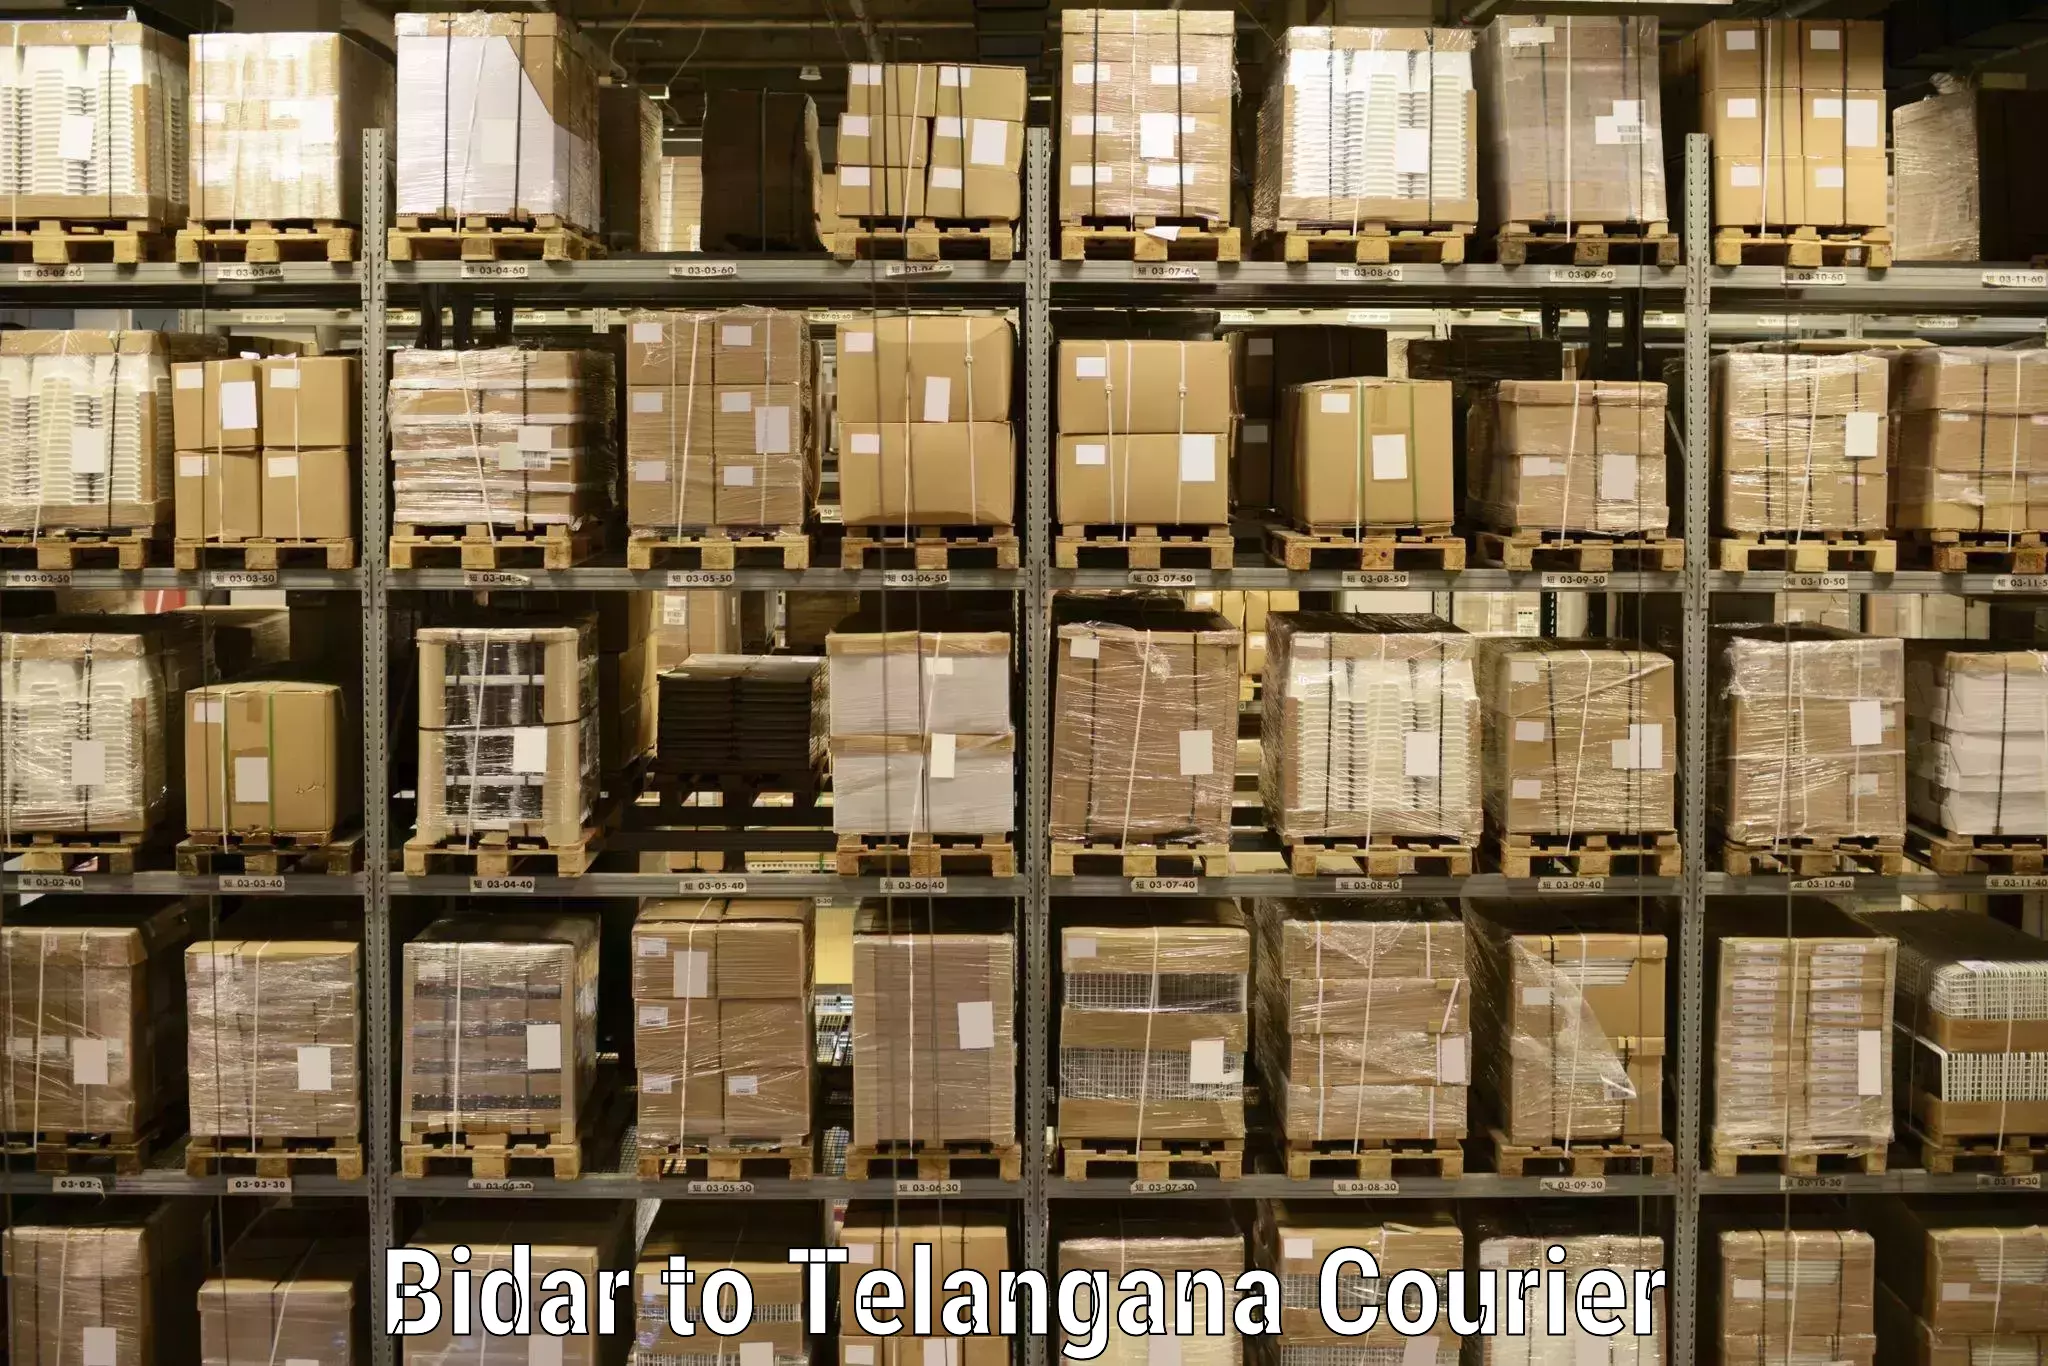 Digital courier platforms Bidar to Sultanabad